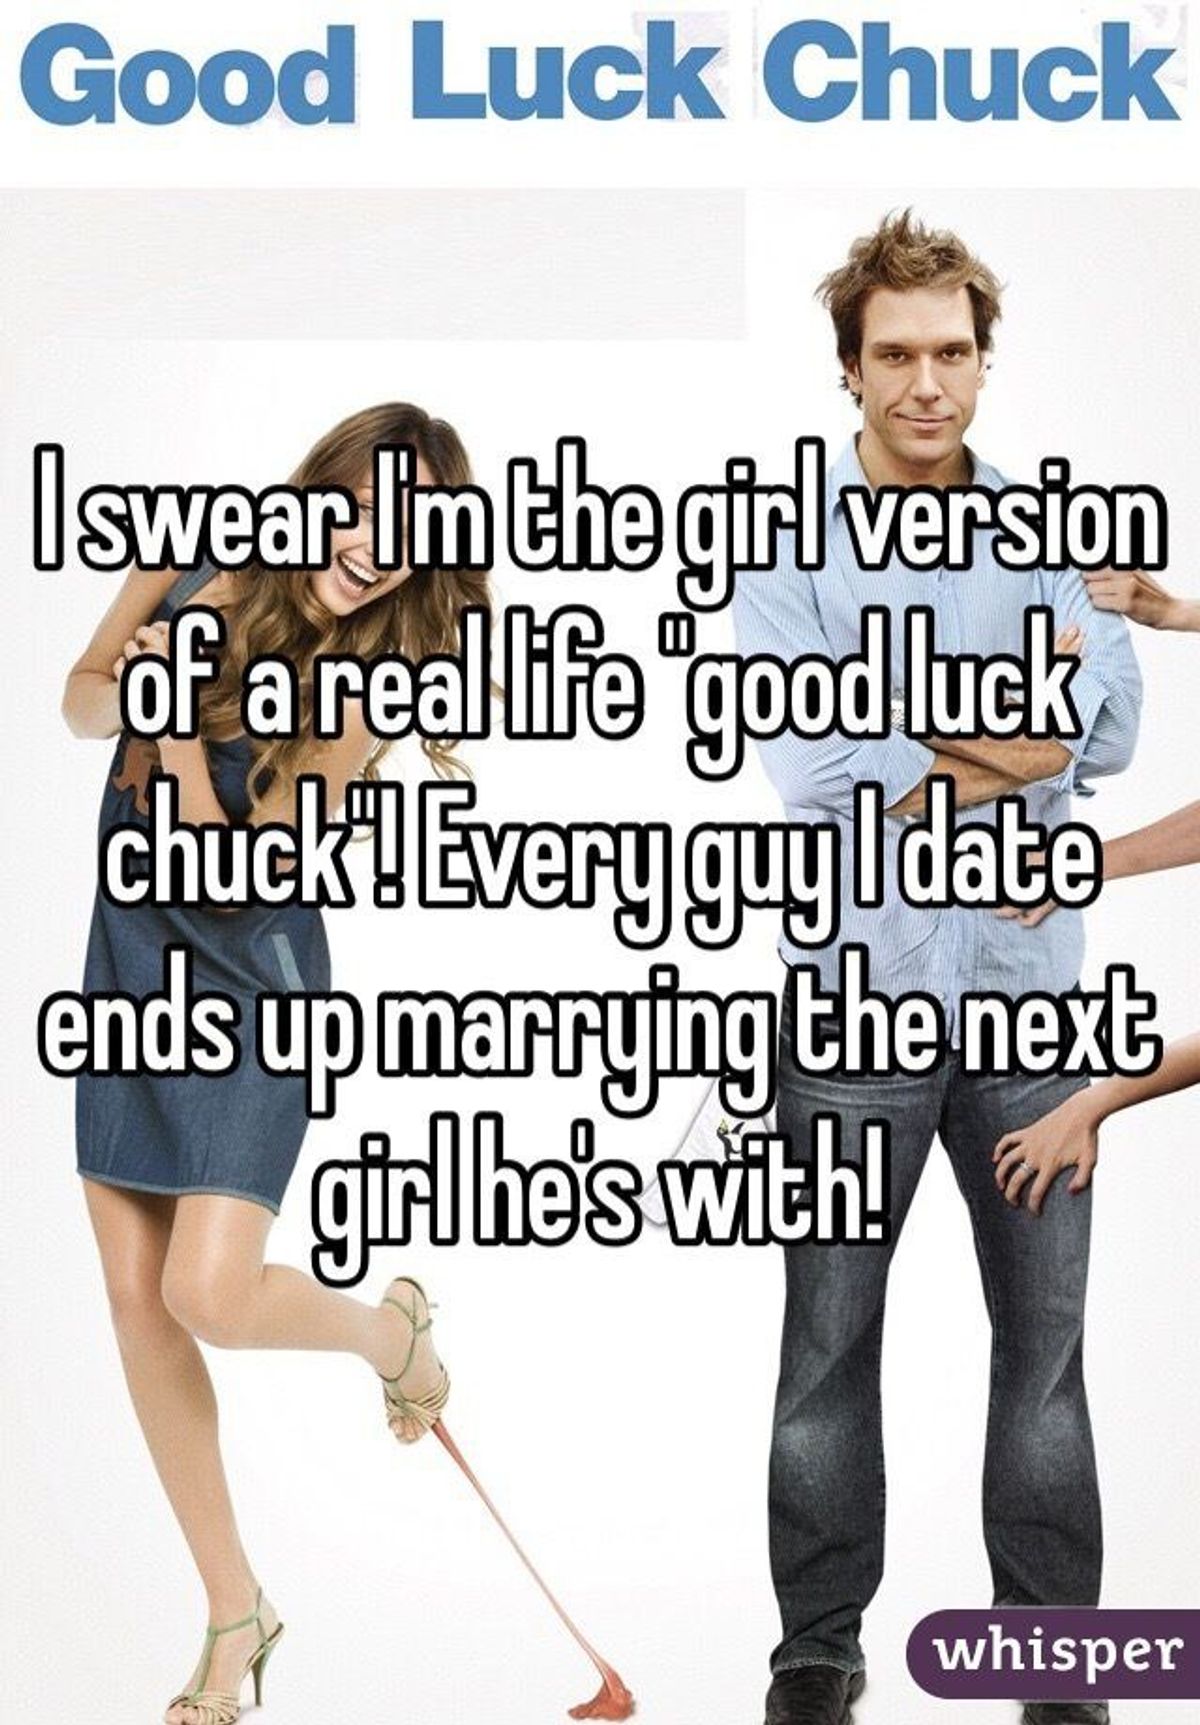 To The "Good Luck Chuck" Girl